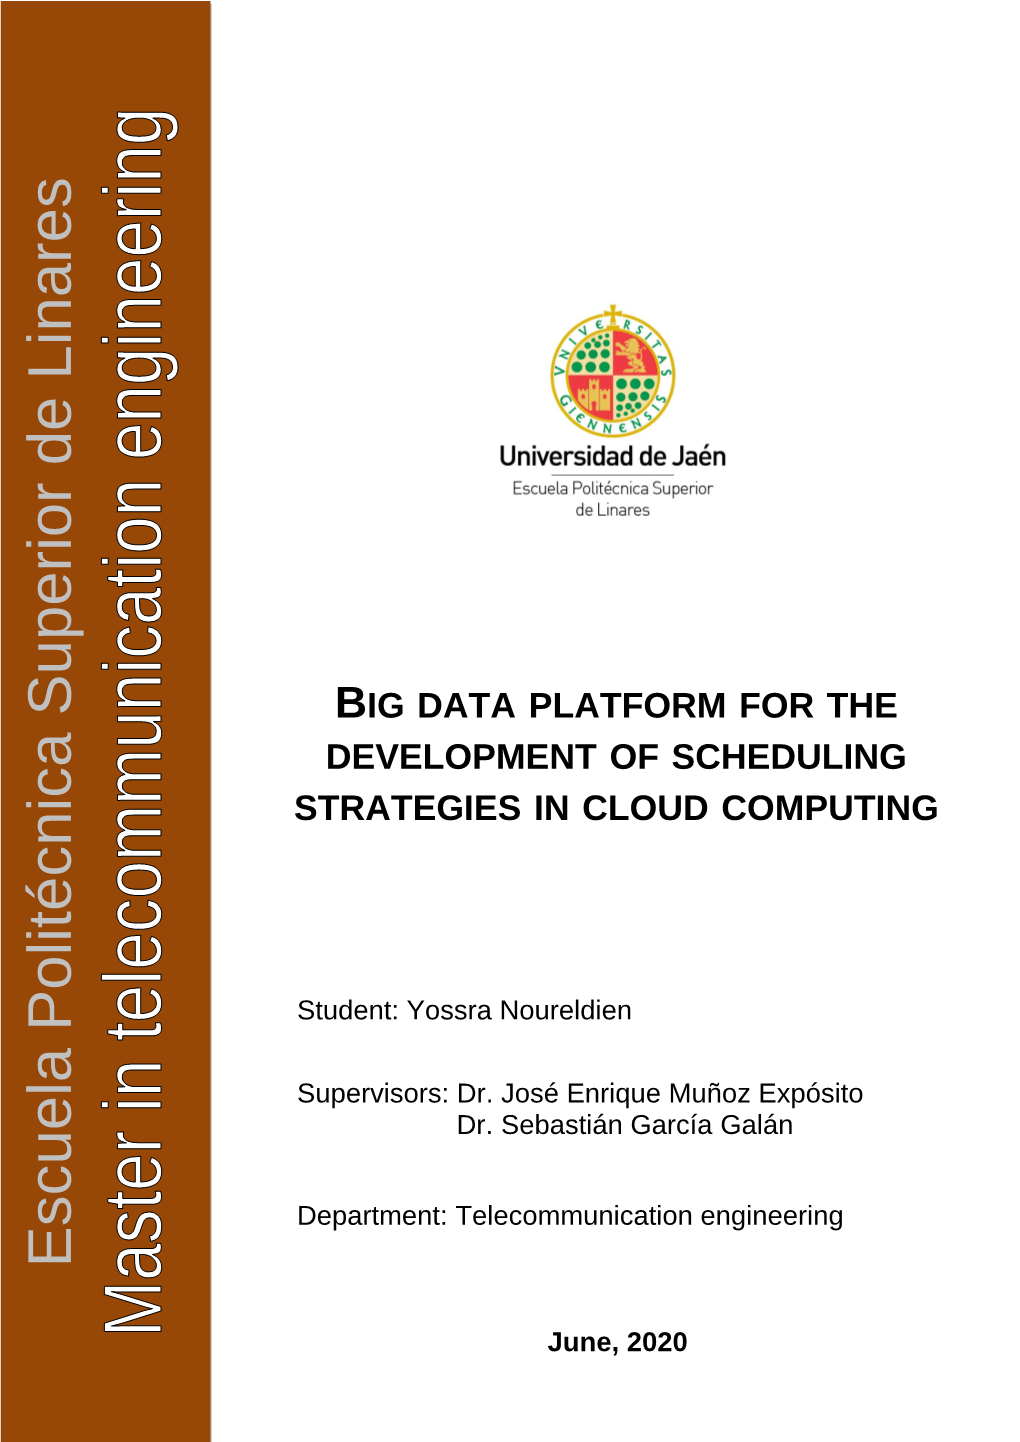 Big Data Platform for the Development of Scheduling Strategies in Cloud Computing